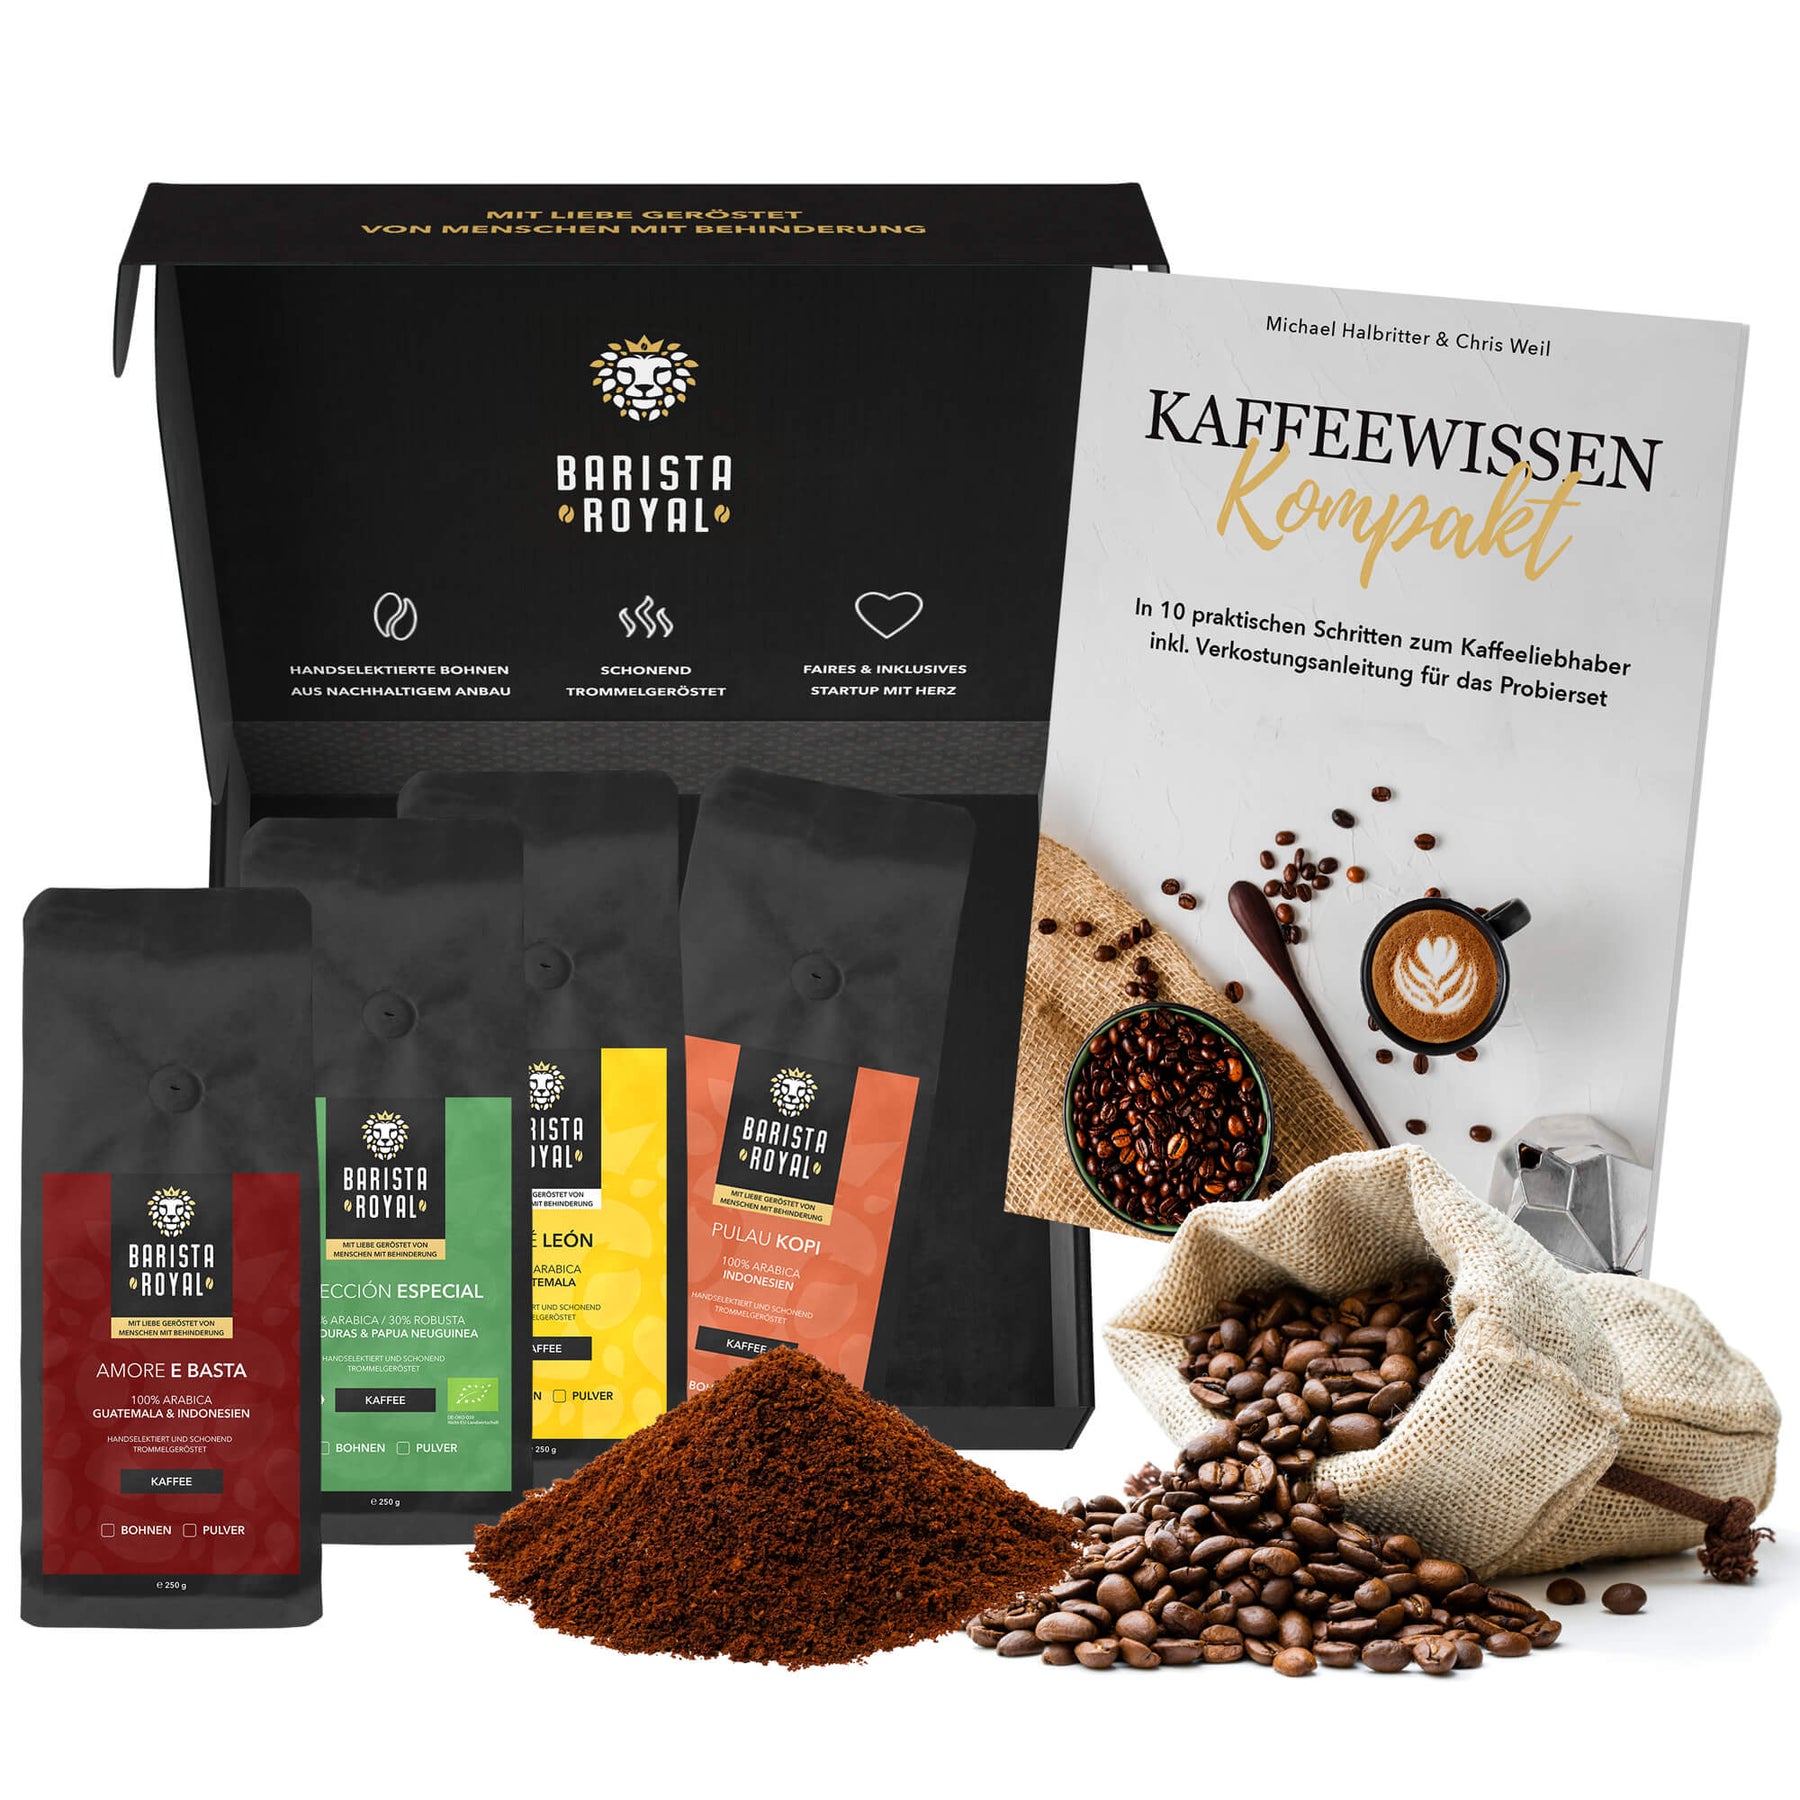 Premium Kaffee Geschenk inkl. Kaffeemagazin (4 x 250g) - Barista Royal GmbH